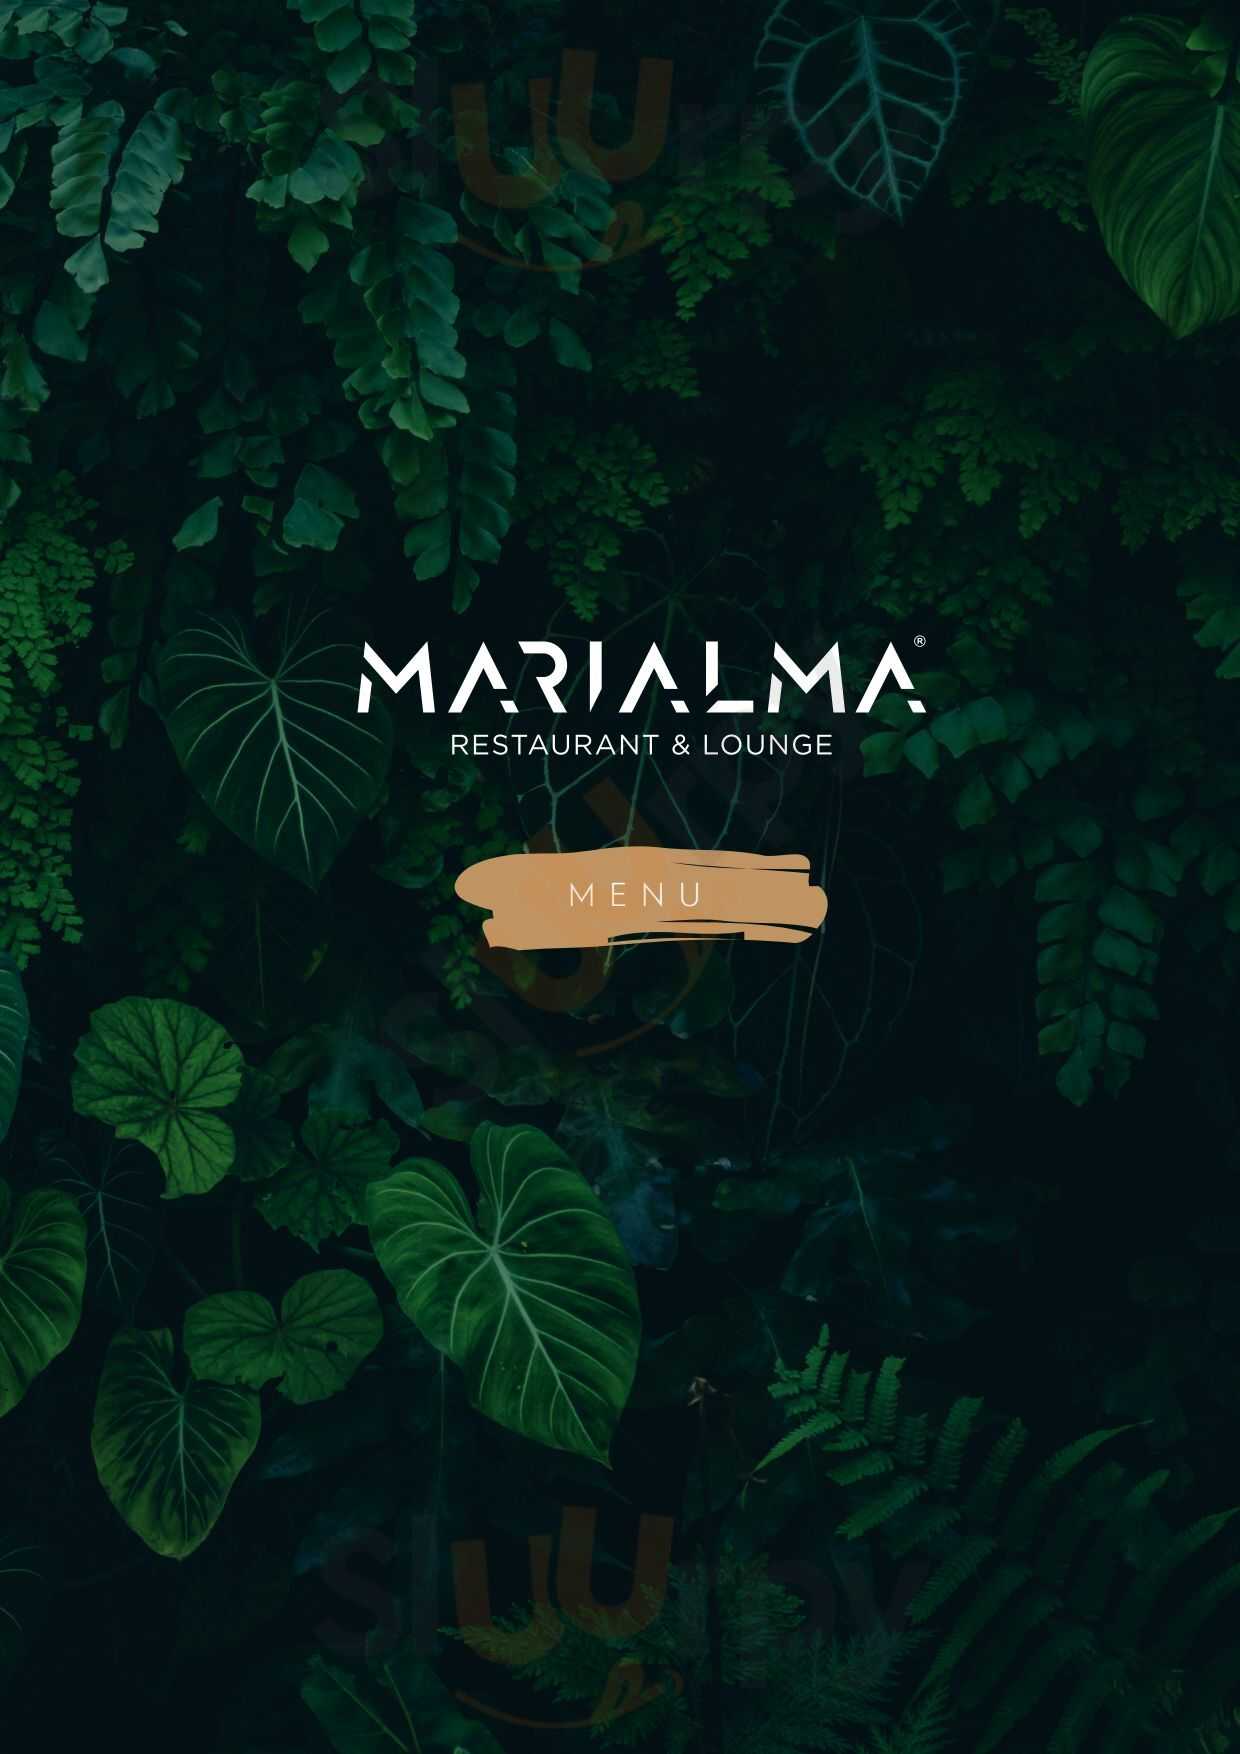 Marialma Restaurant & Lounge Corroios Menu - 1